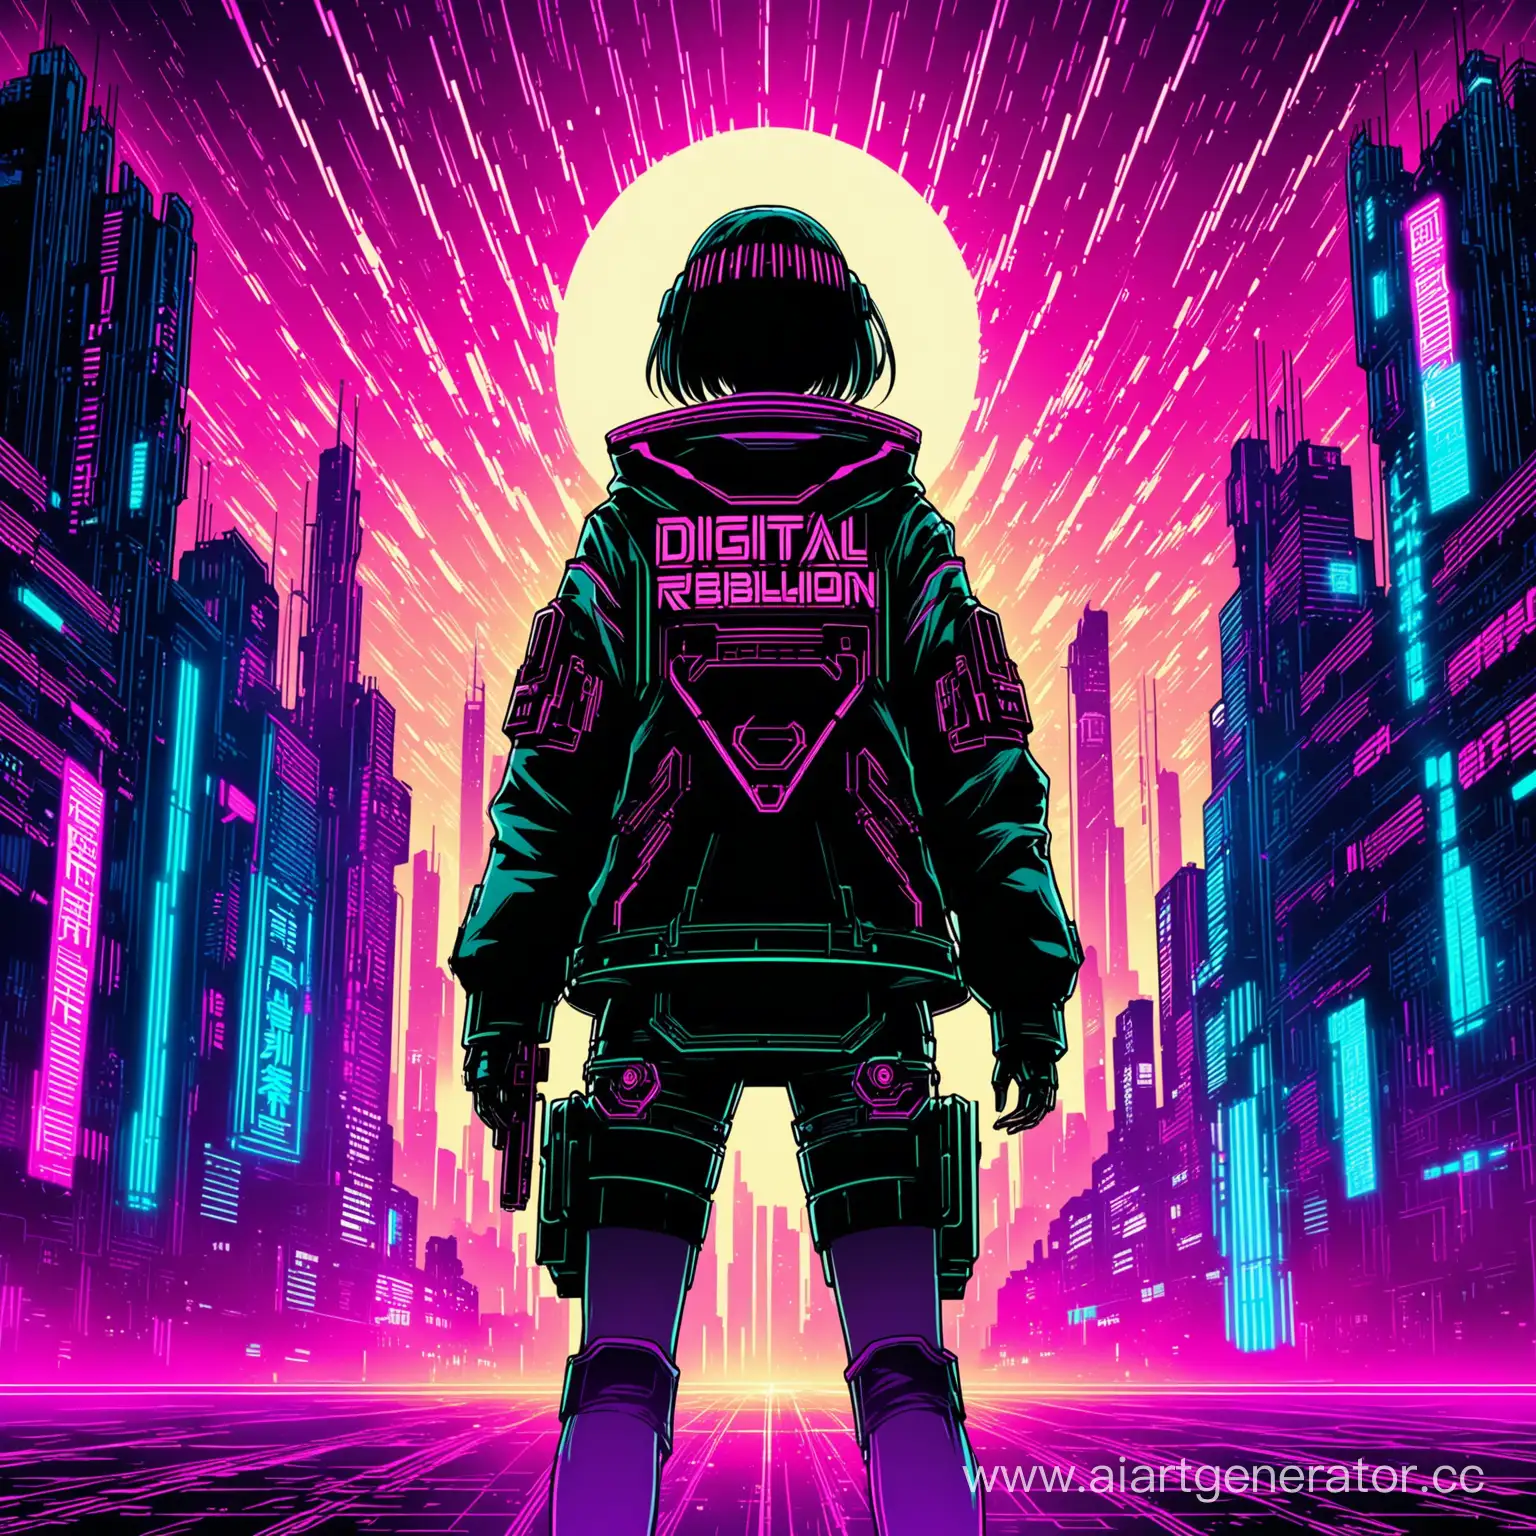 Digital-Rebellion-Cyberpunk-Anime-Movie-Poster